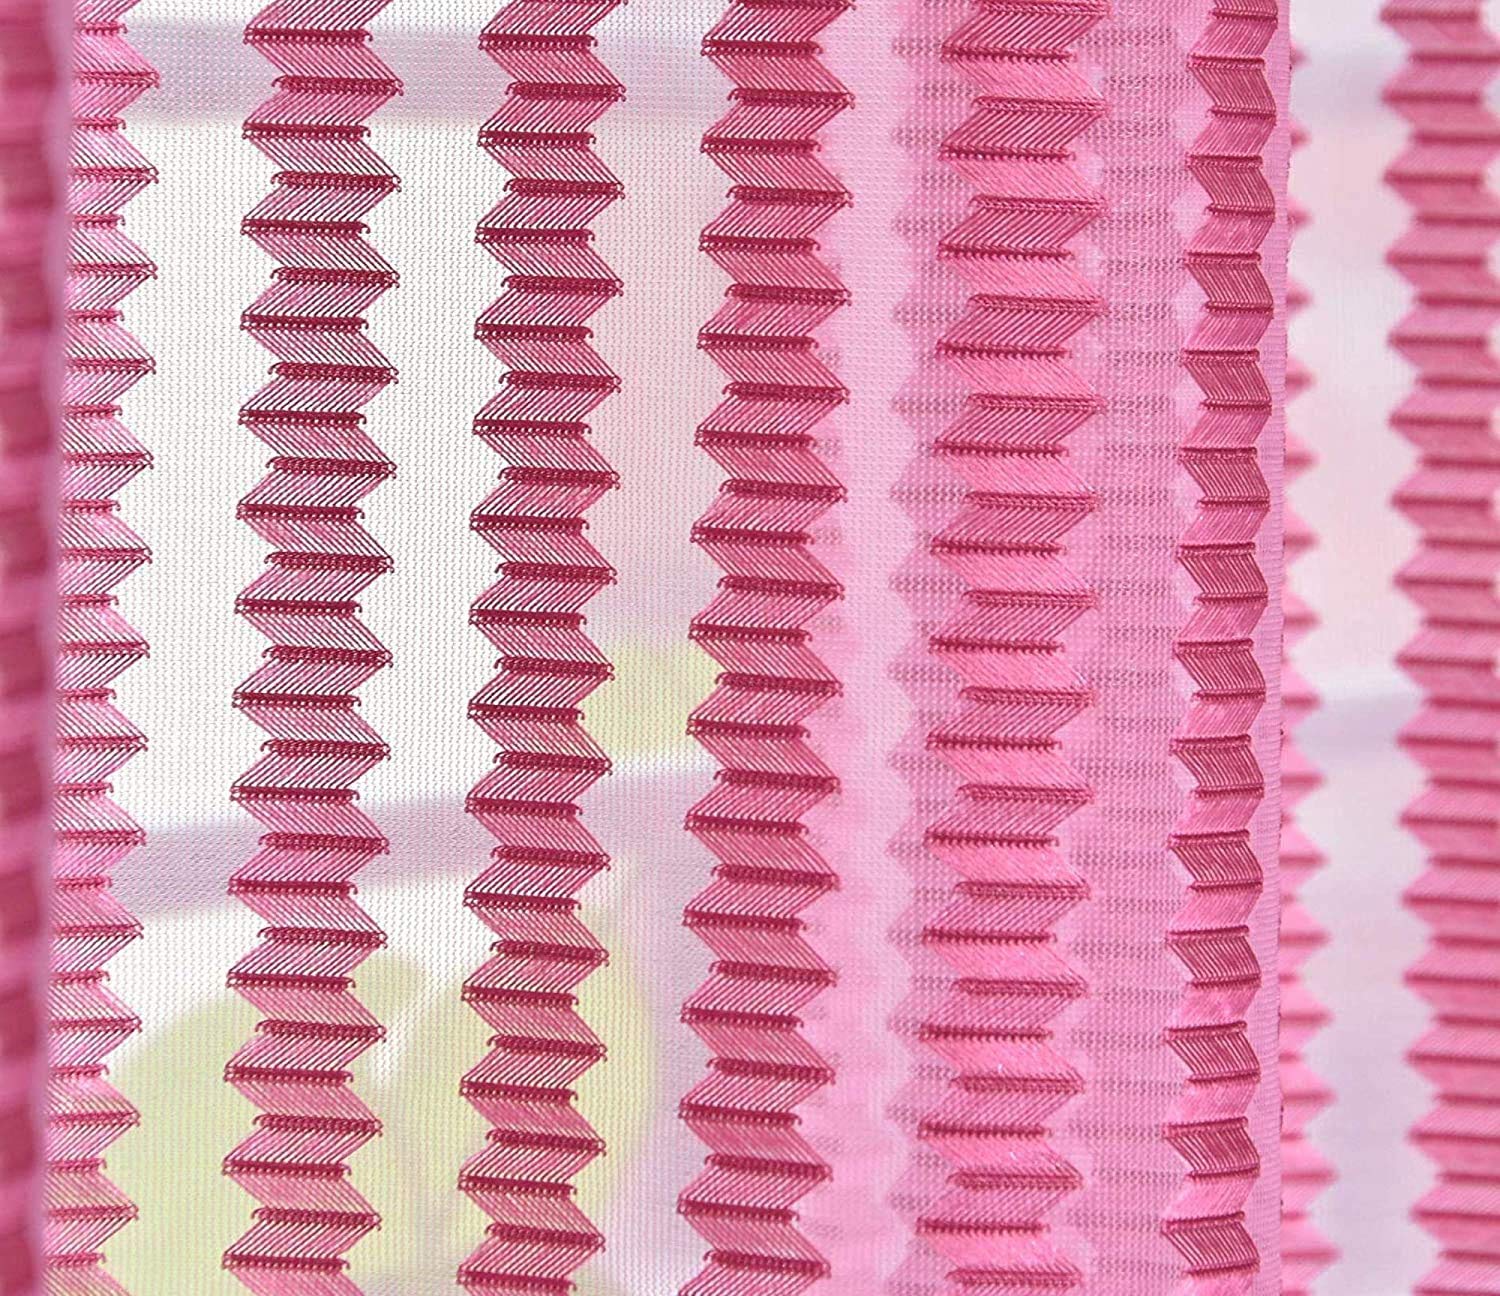 Sheer Net (Tissue) - Pink - PARDEWALE.in